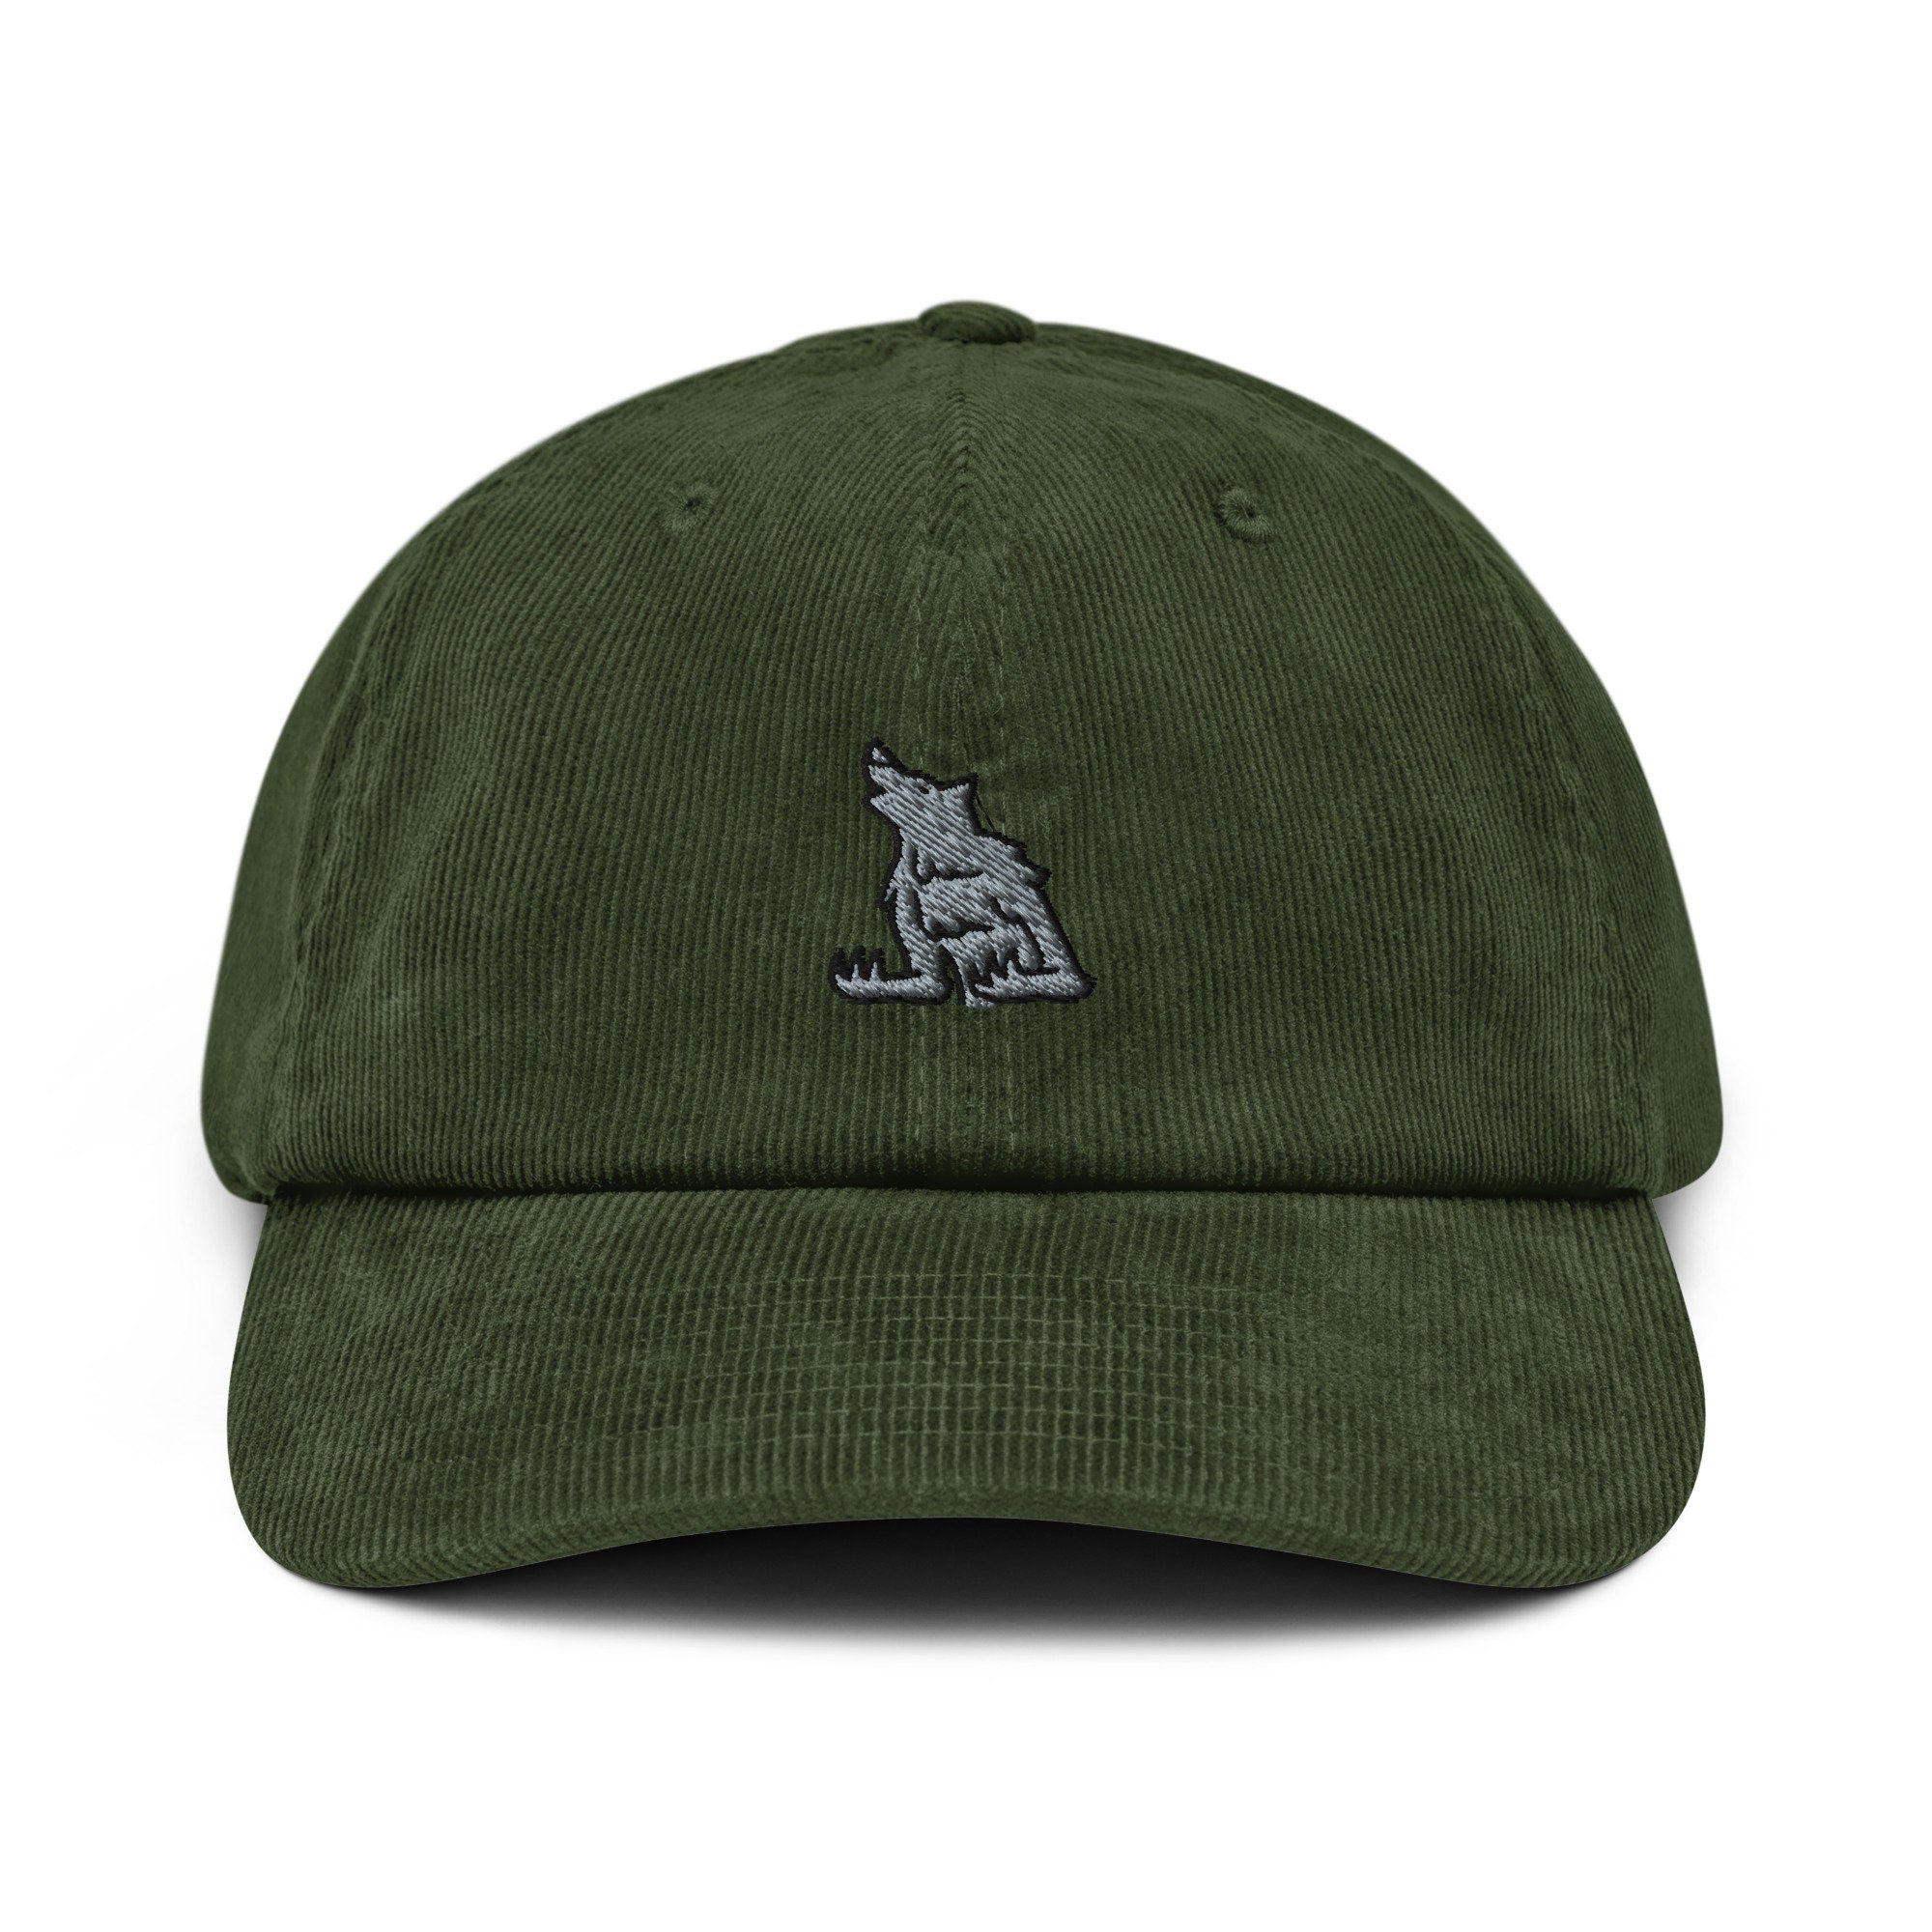 Werewolf Corduroy Hat, Handmade Embroidered Corduroy Dad Cap - Multiple Colors